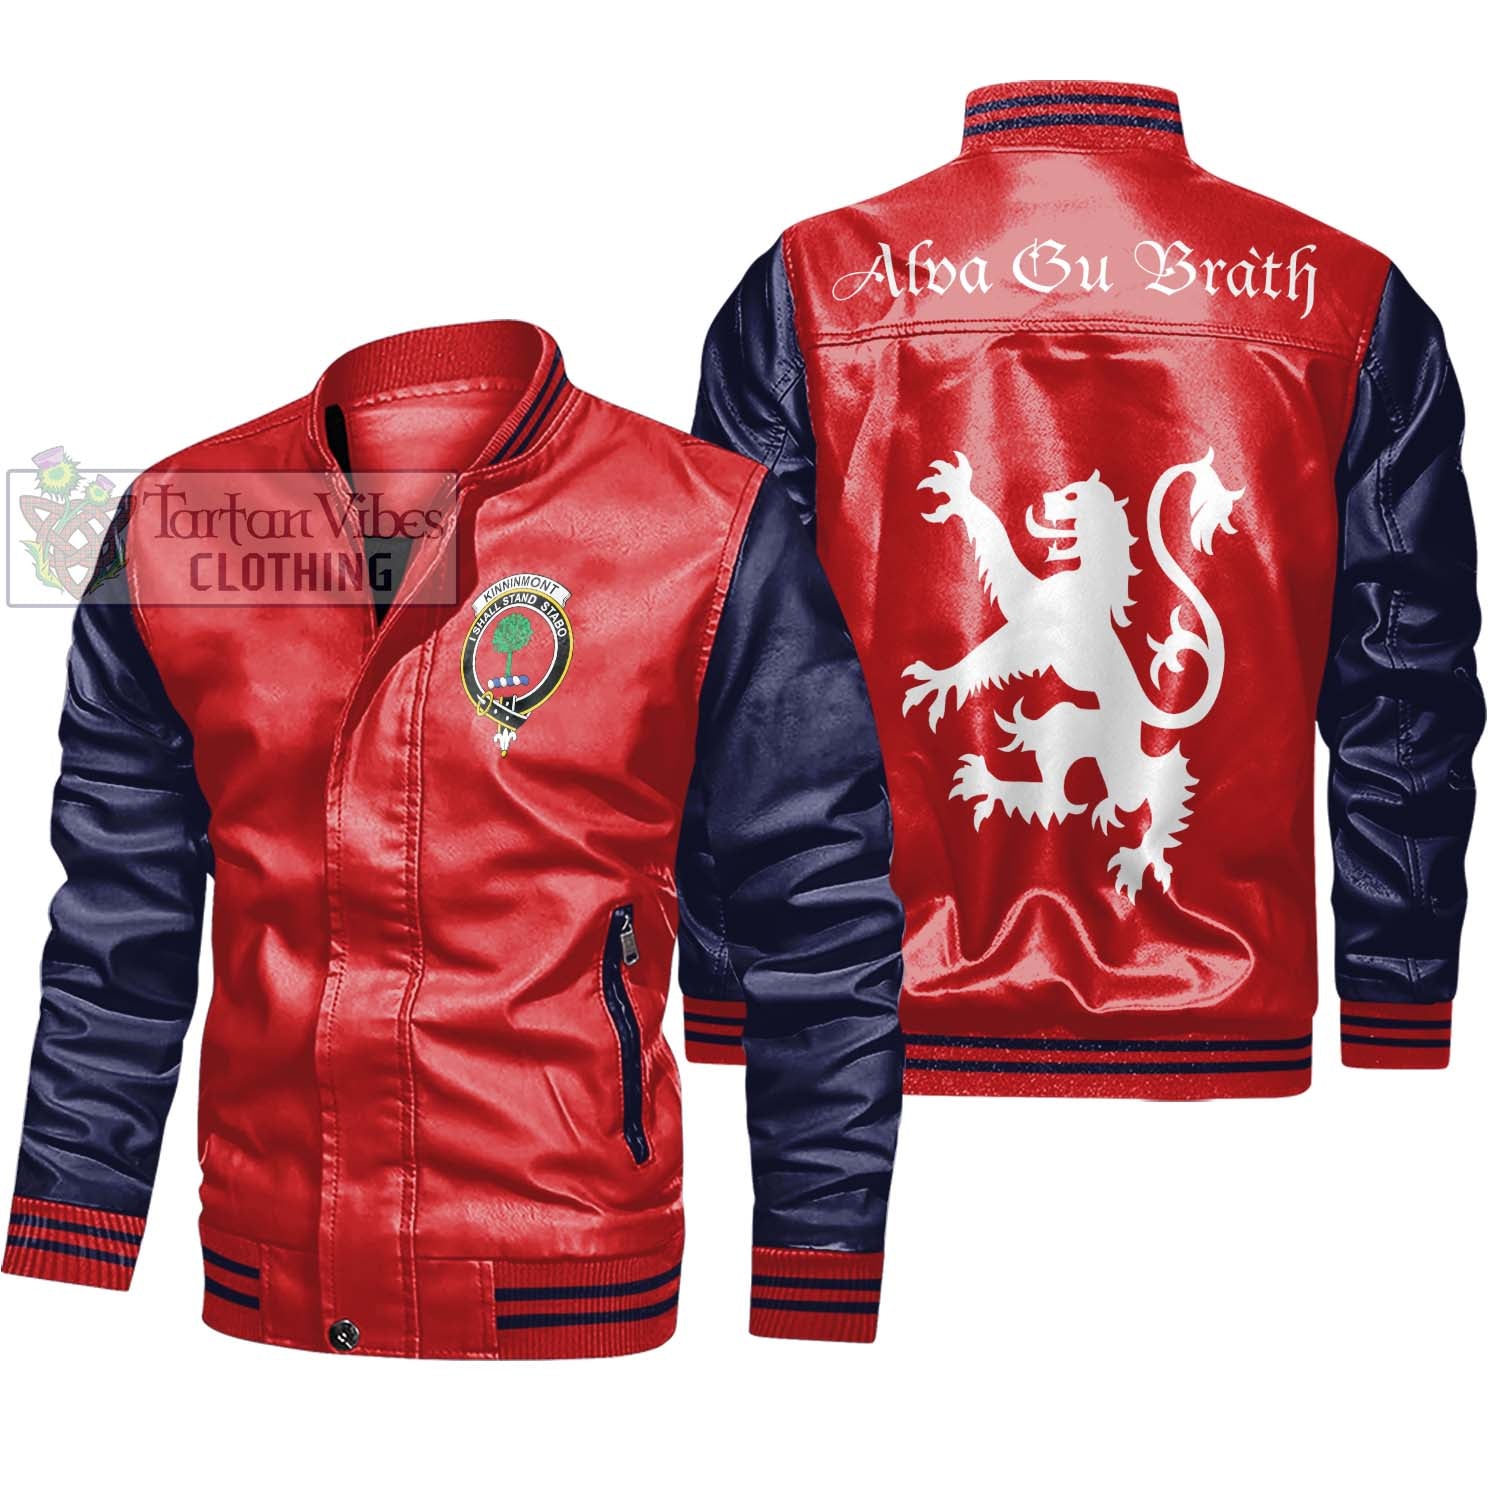 Tartan Vibes Clothing Kinninmont Family Crest Leather Bomber Jacket Lion Rampant Alba Gu Brath Style